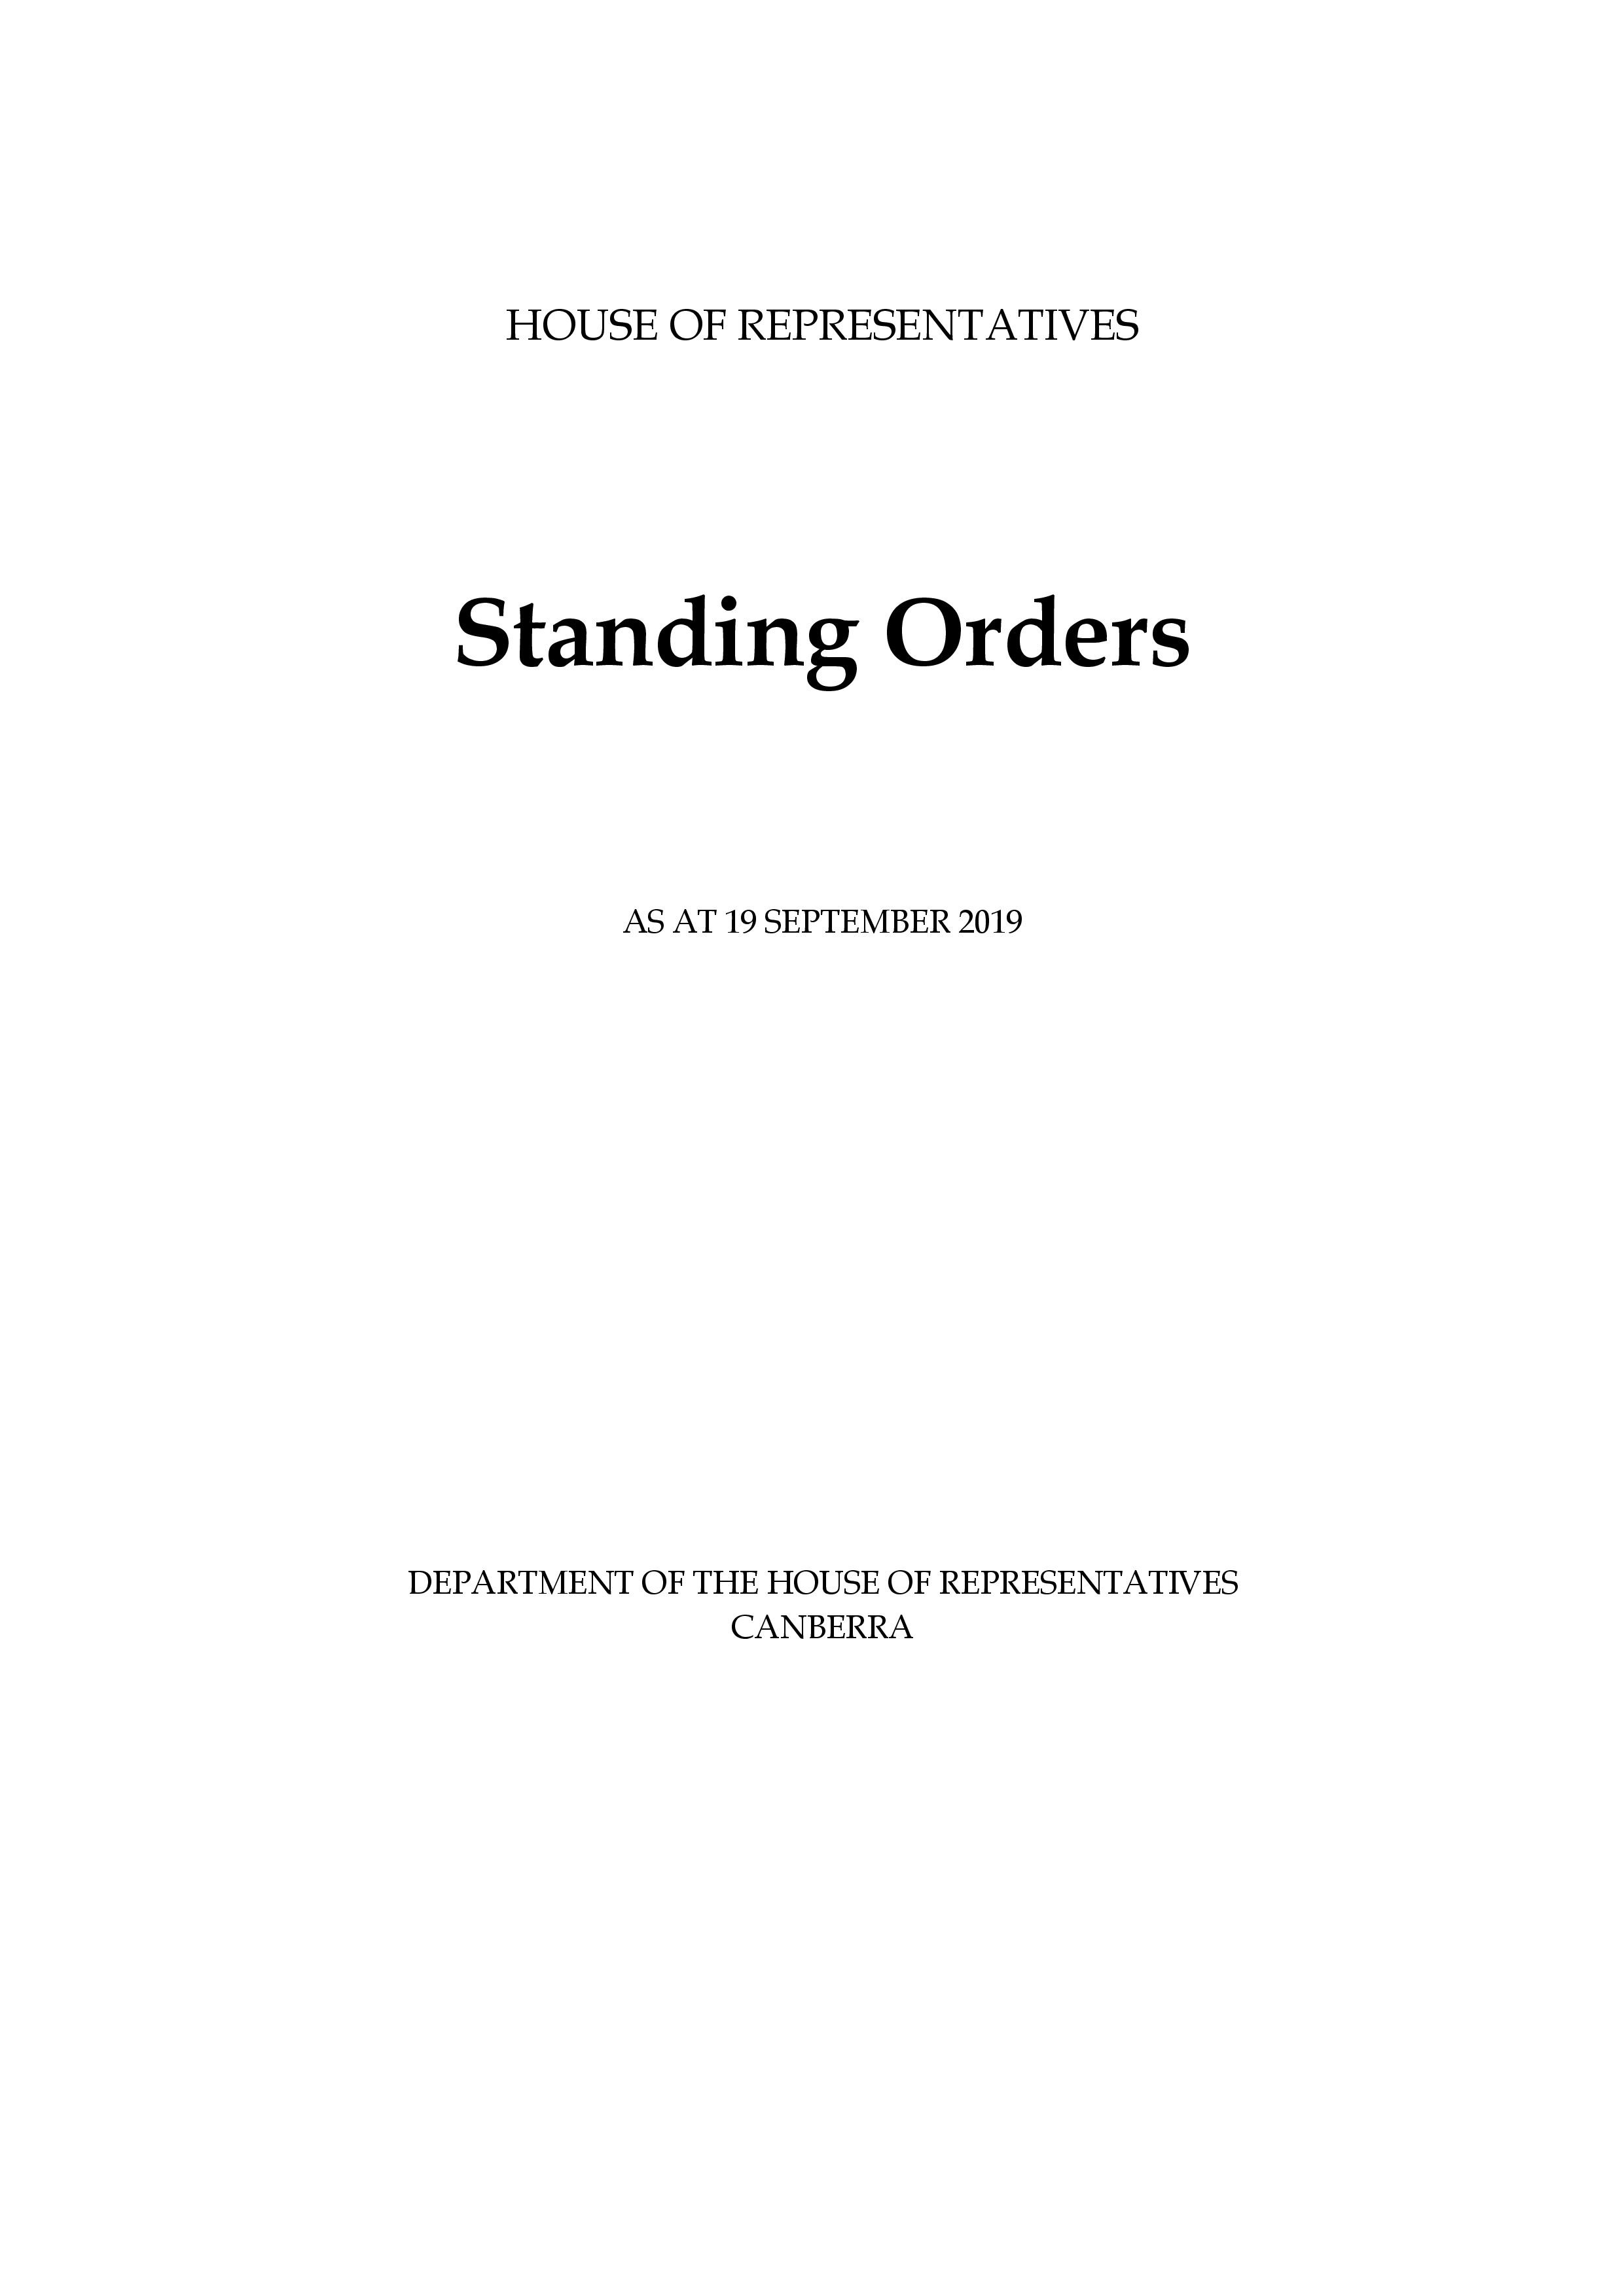 Australian House of Representatives Standig Orders